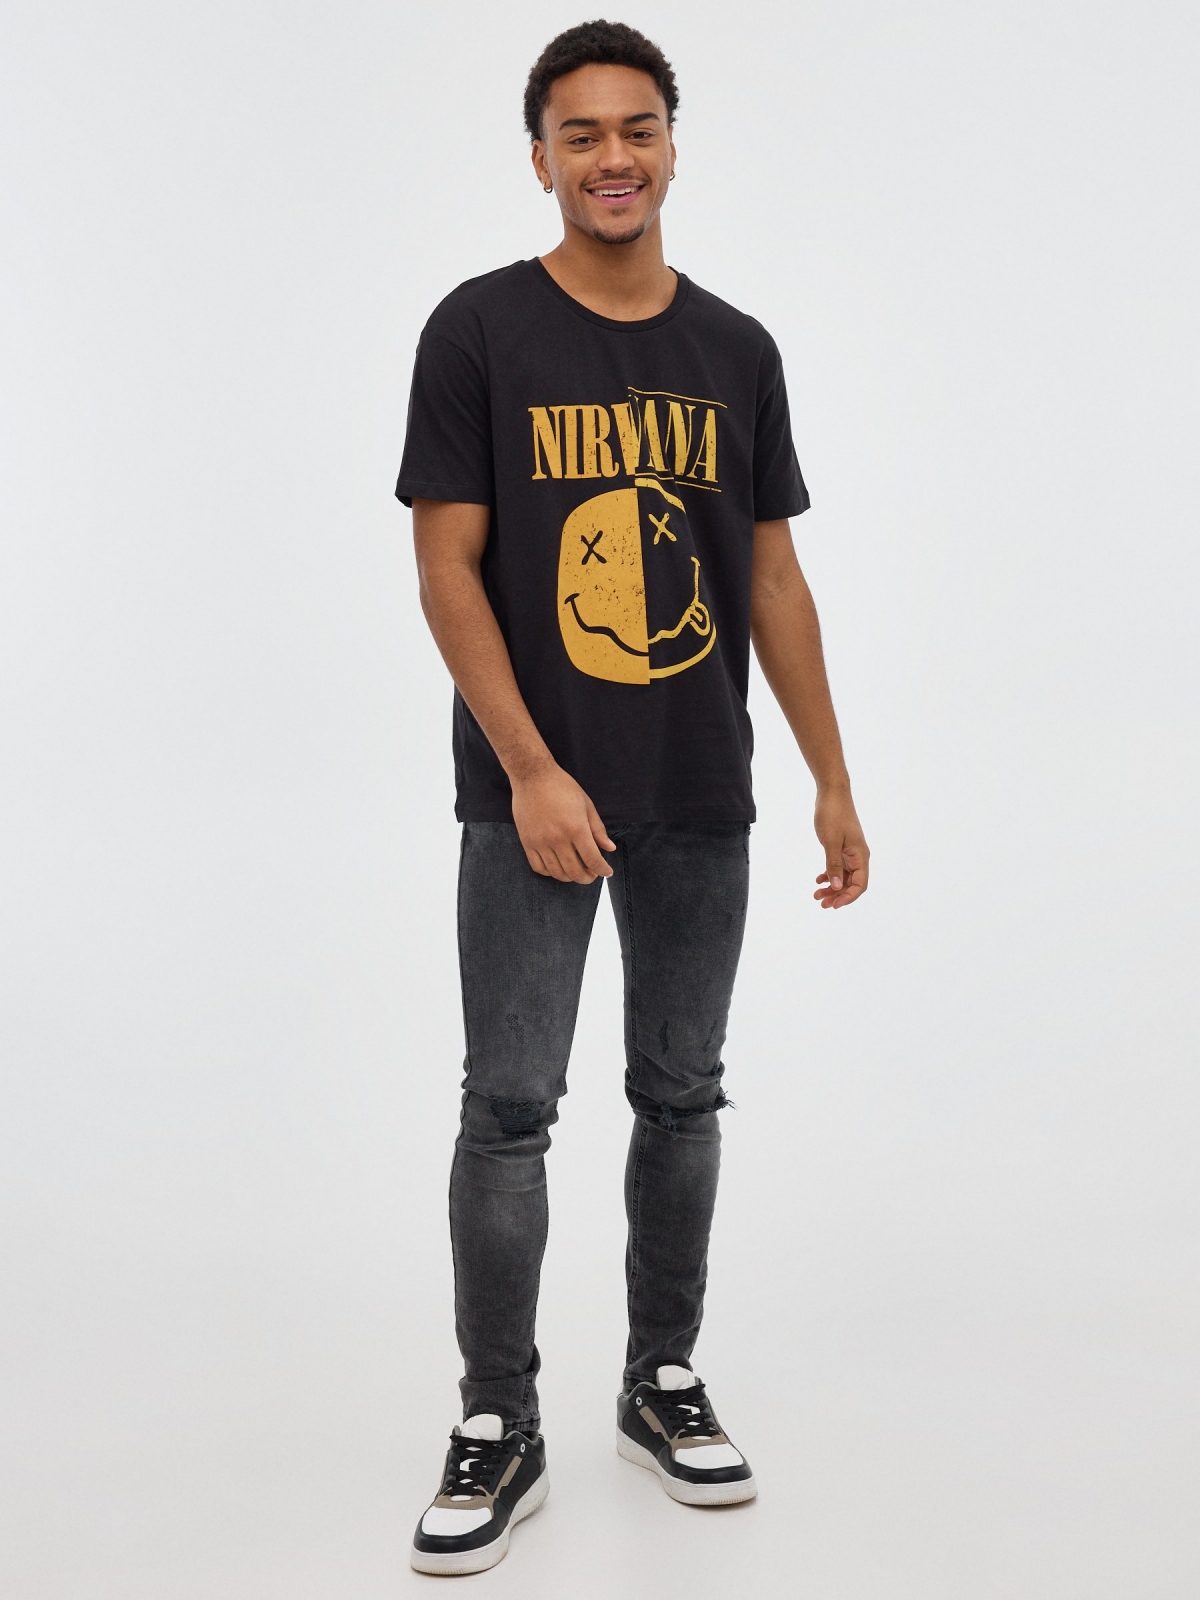 Nirvana printed T-shirt dark grey front view